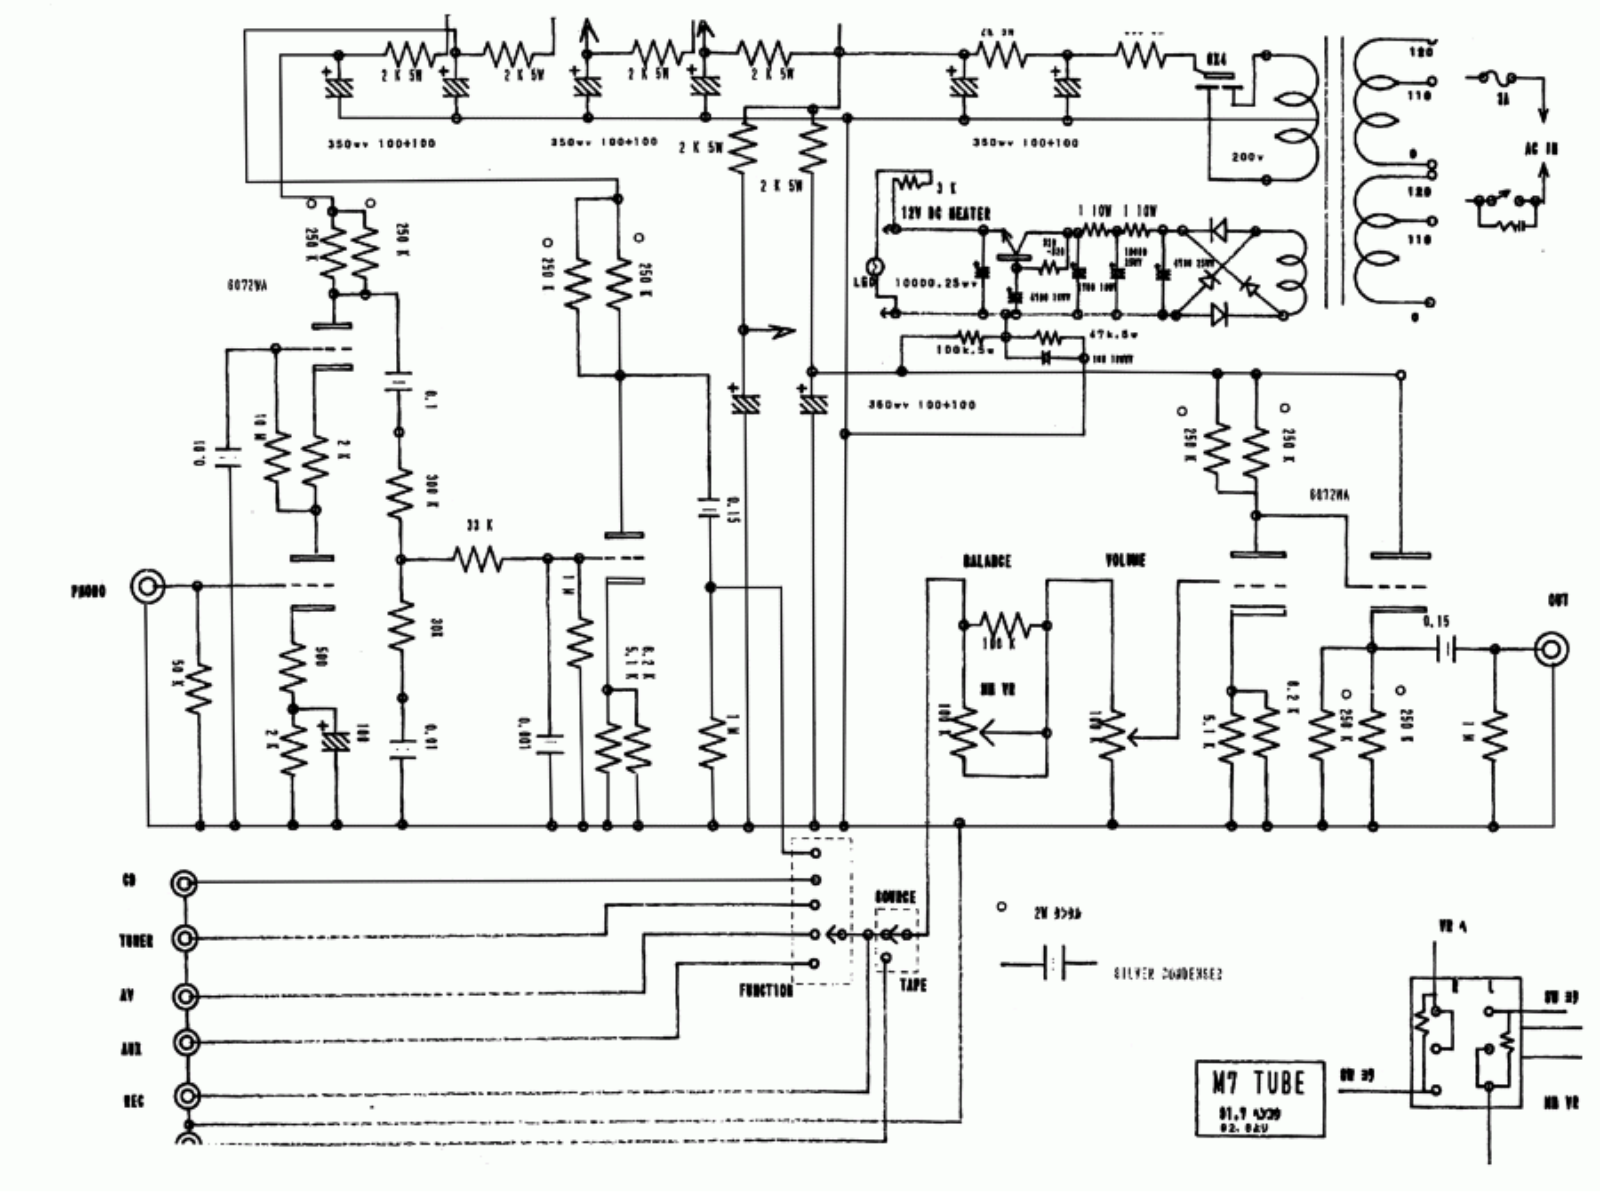 Audionote m7 schematic